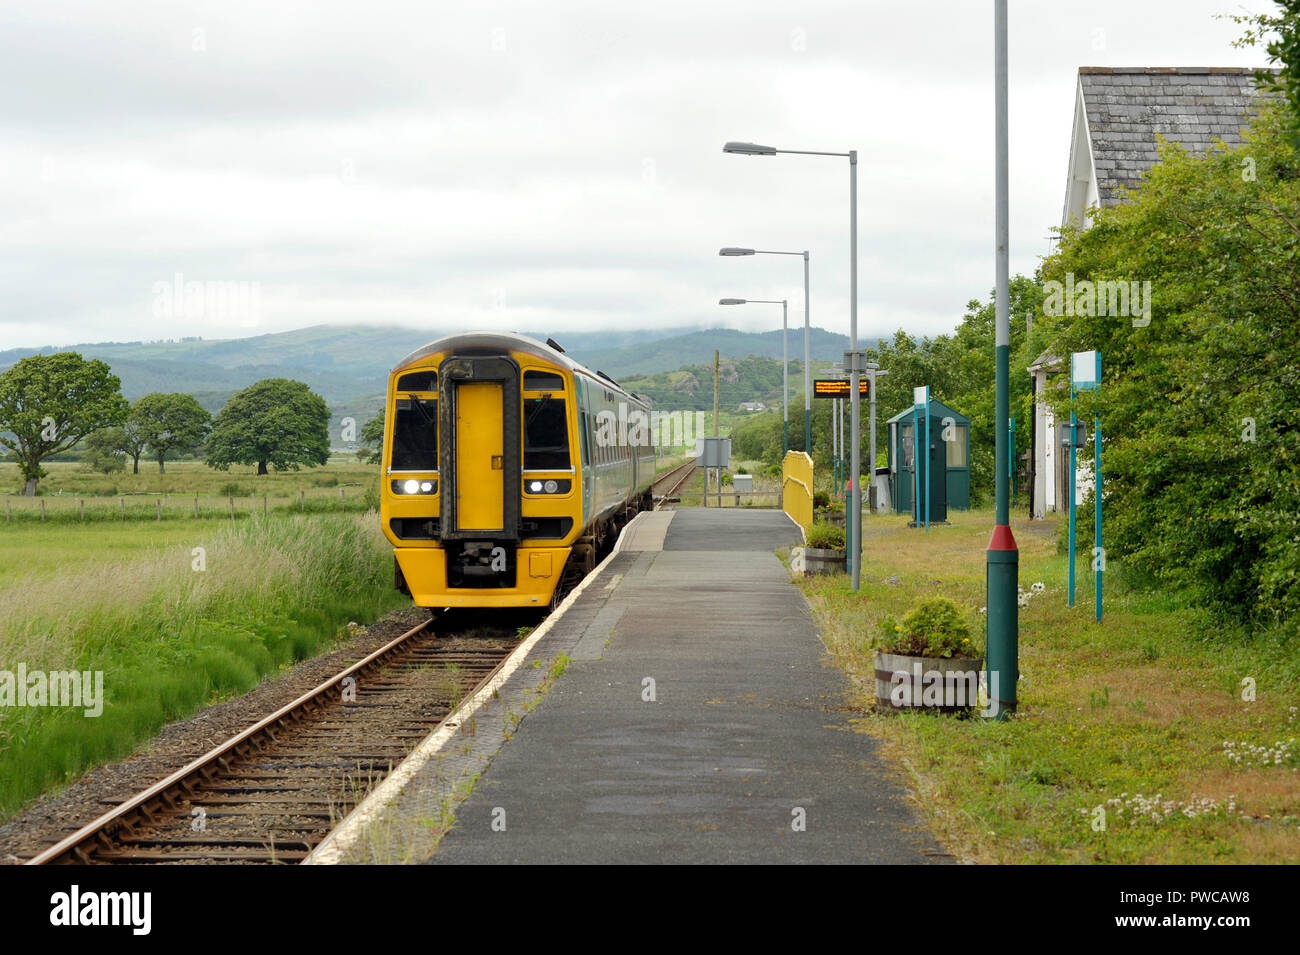 Railway diesel train locomotive at rural Talsarnau station, Gwynedd in North Wales UK. Stock Photo